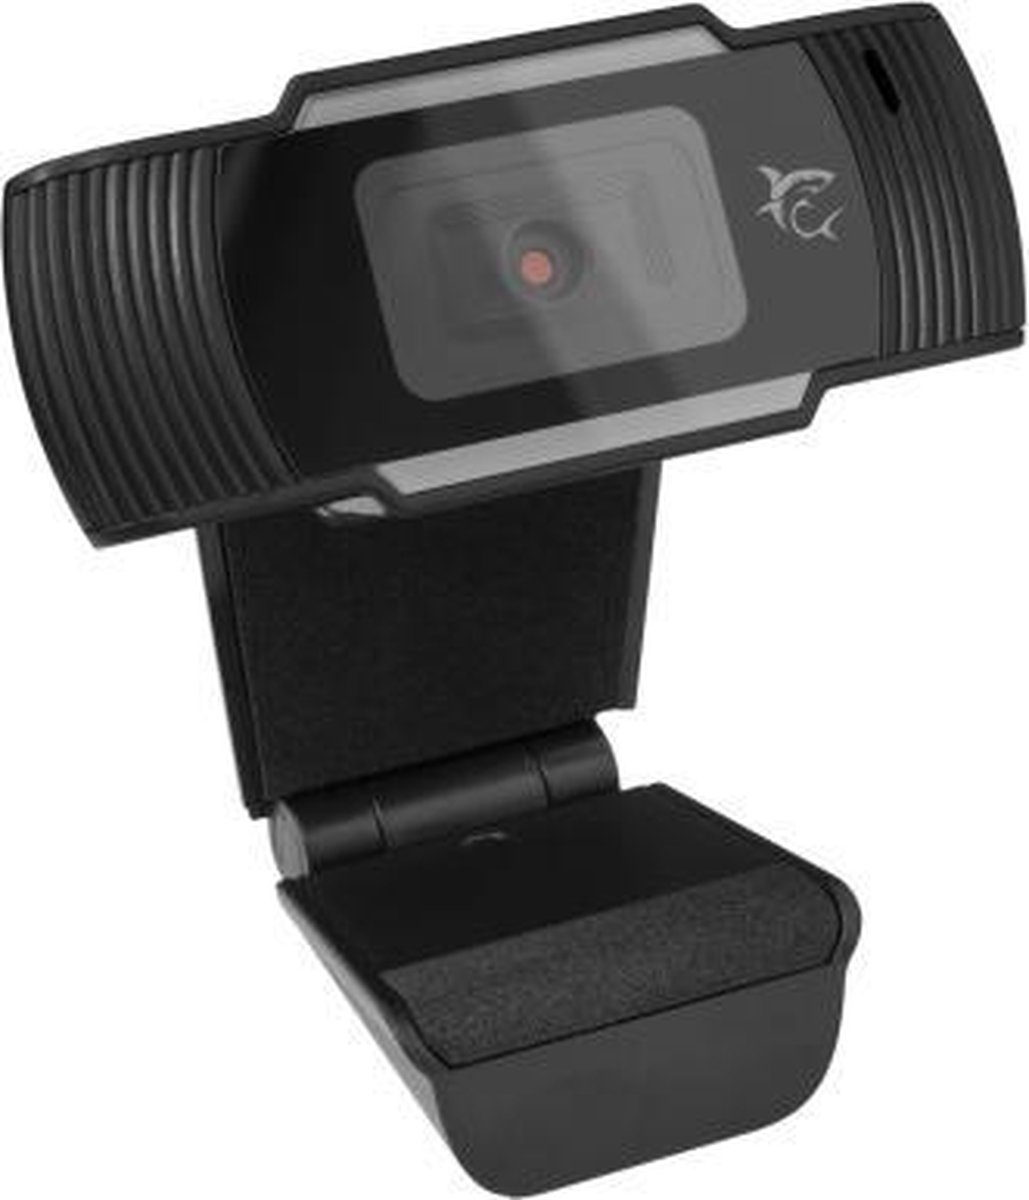 White Shark Cyclops Webcam Full HD 1080p met Microfoon - Zwart